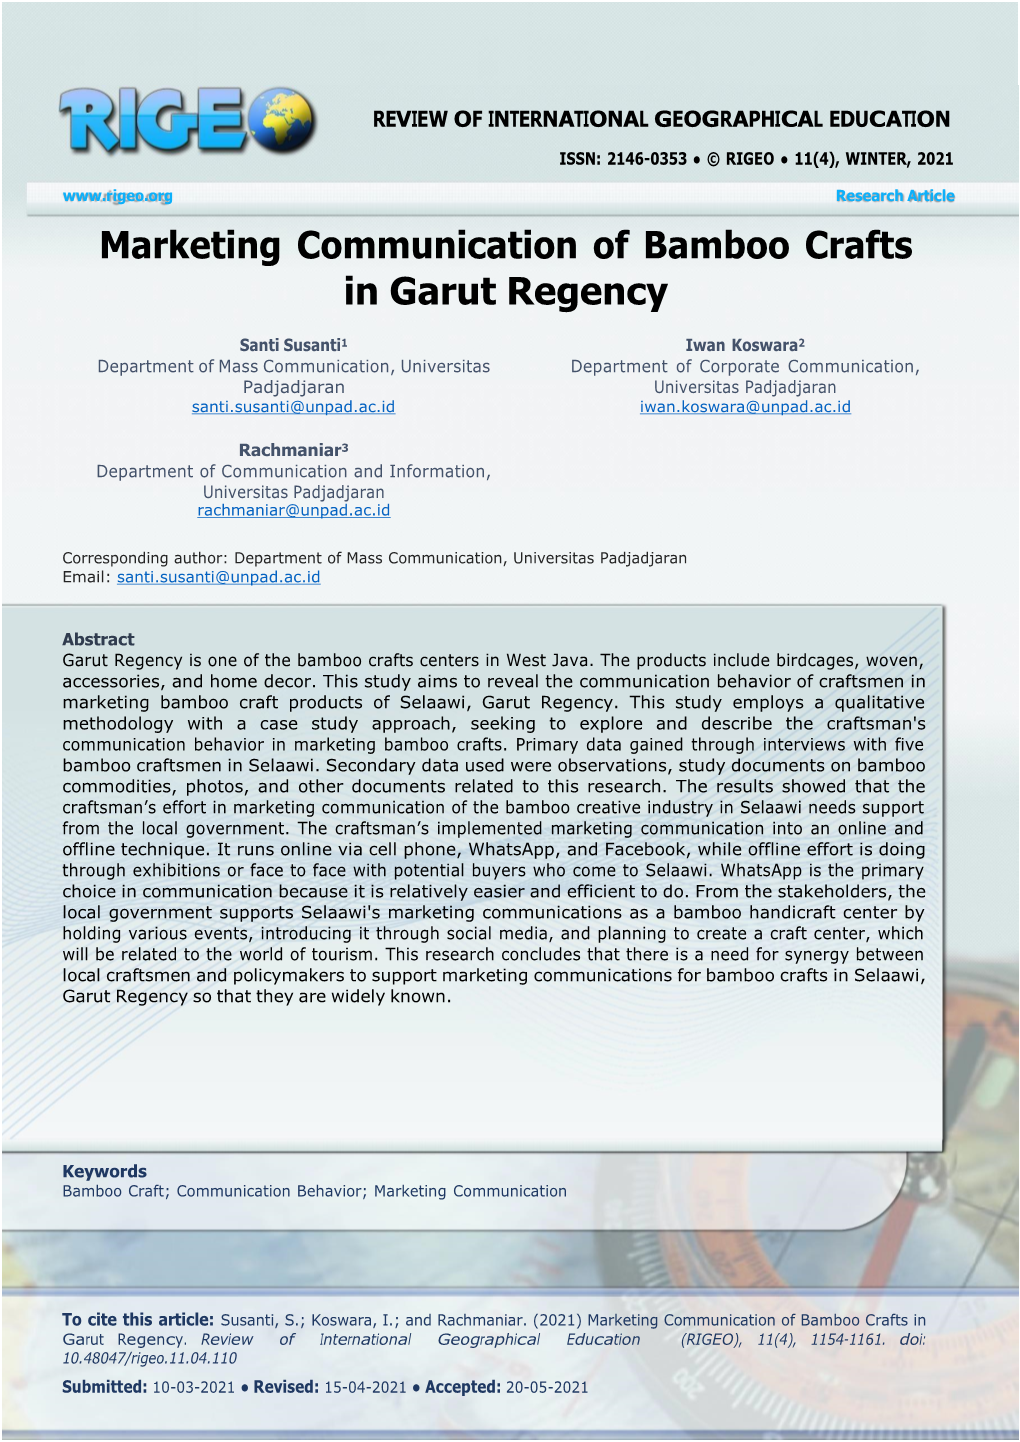 Marketing Communication of Bamboo Crafts in Garut Regency